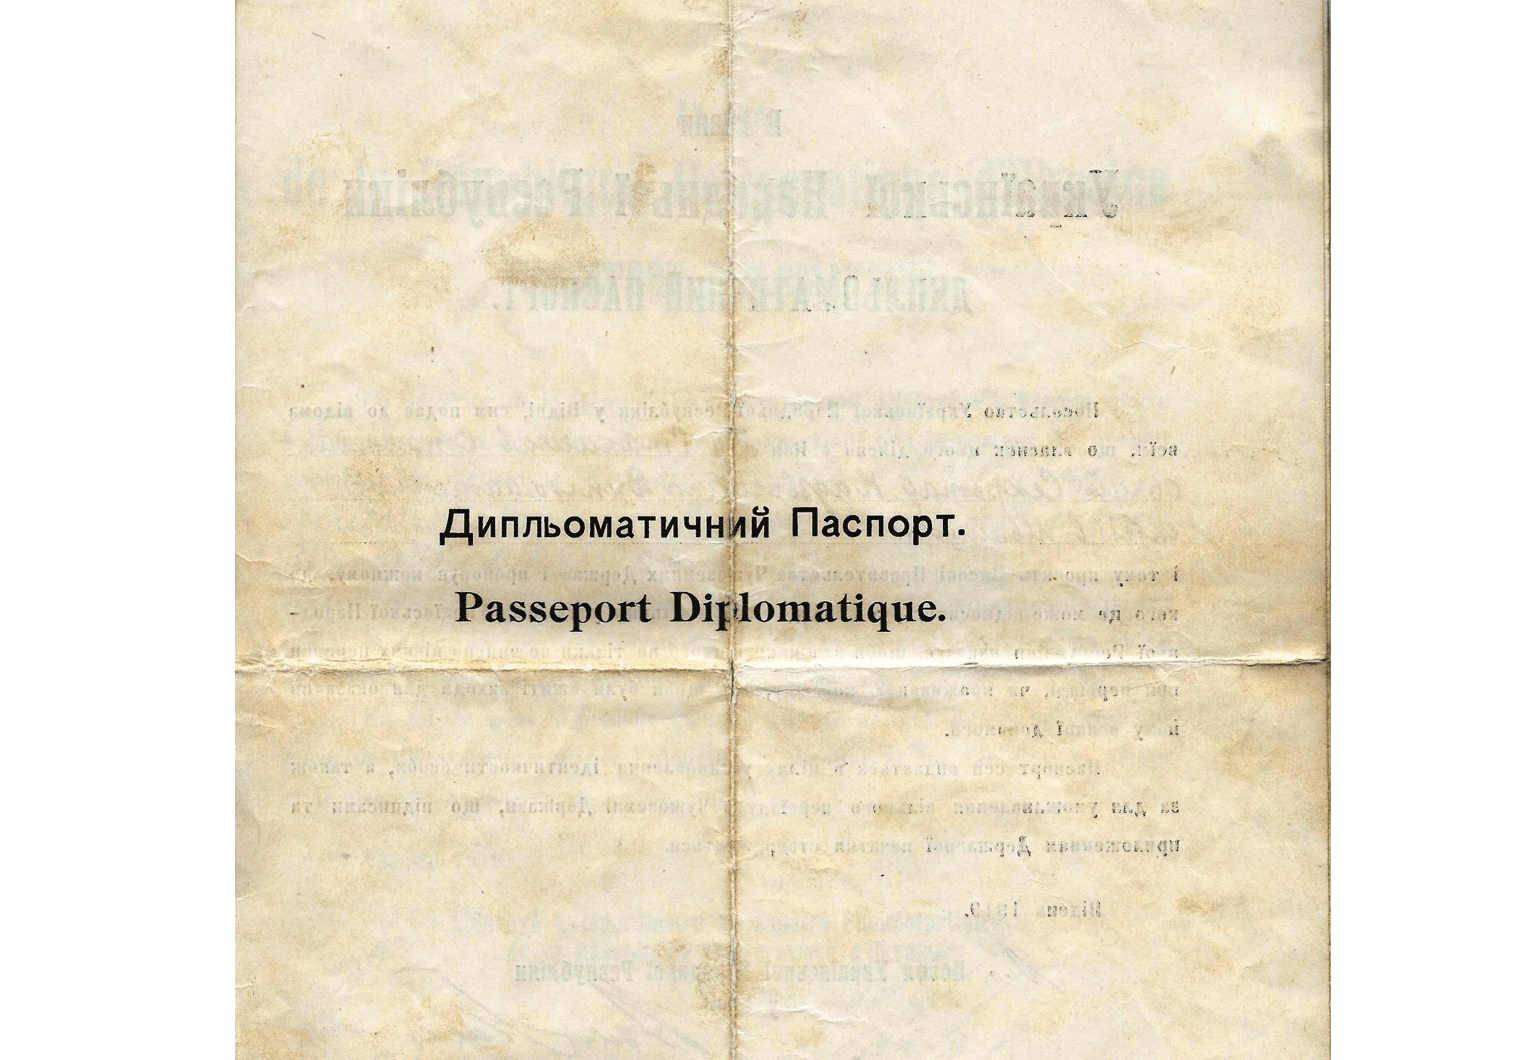 Ukrainian passport 1919